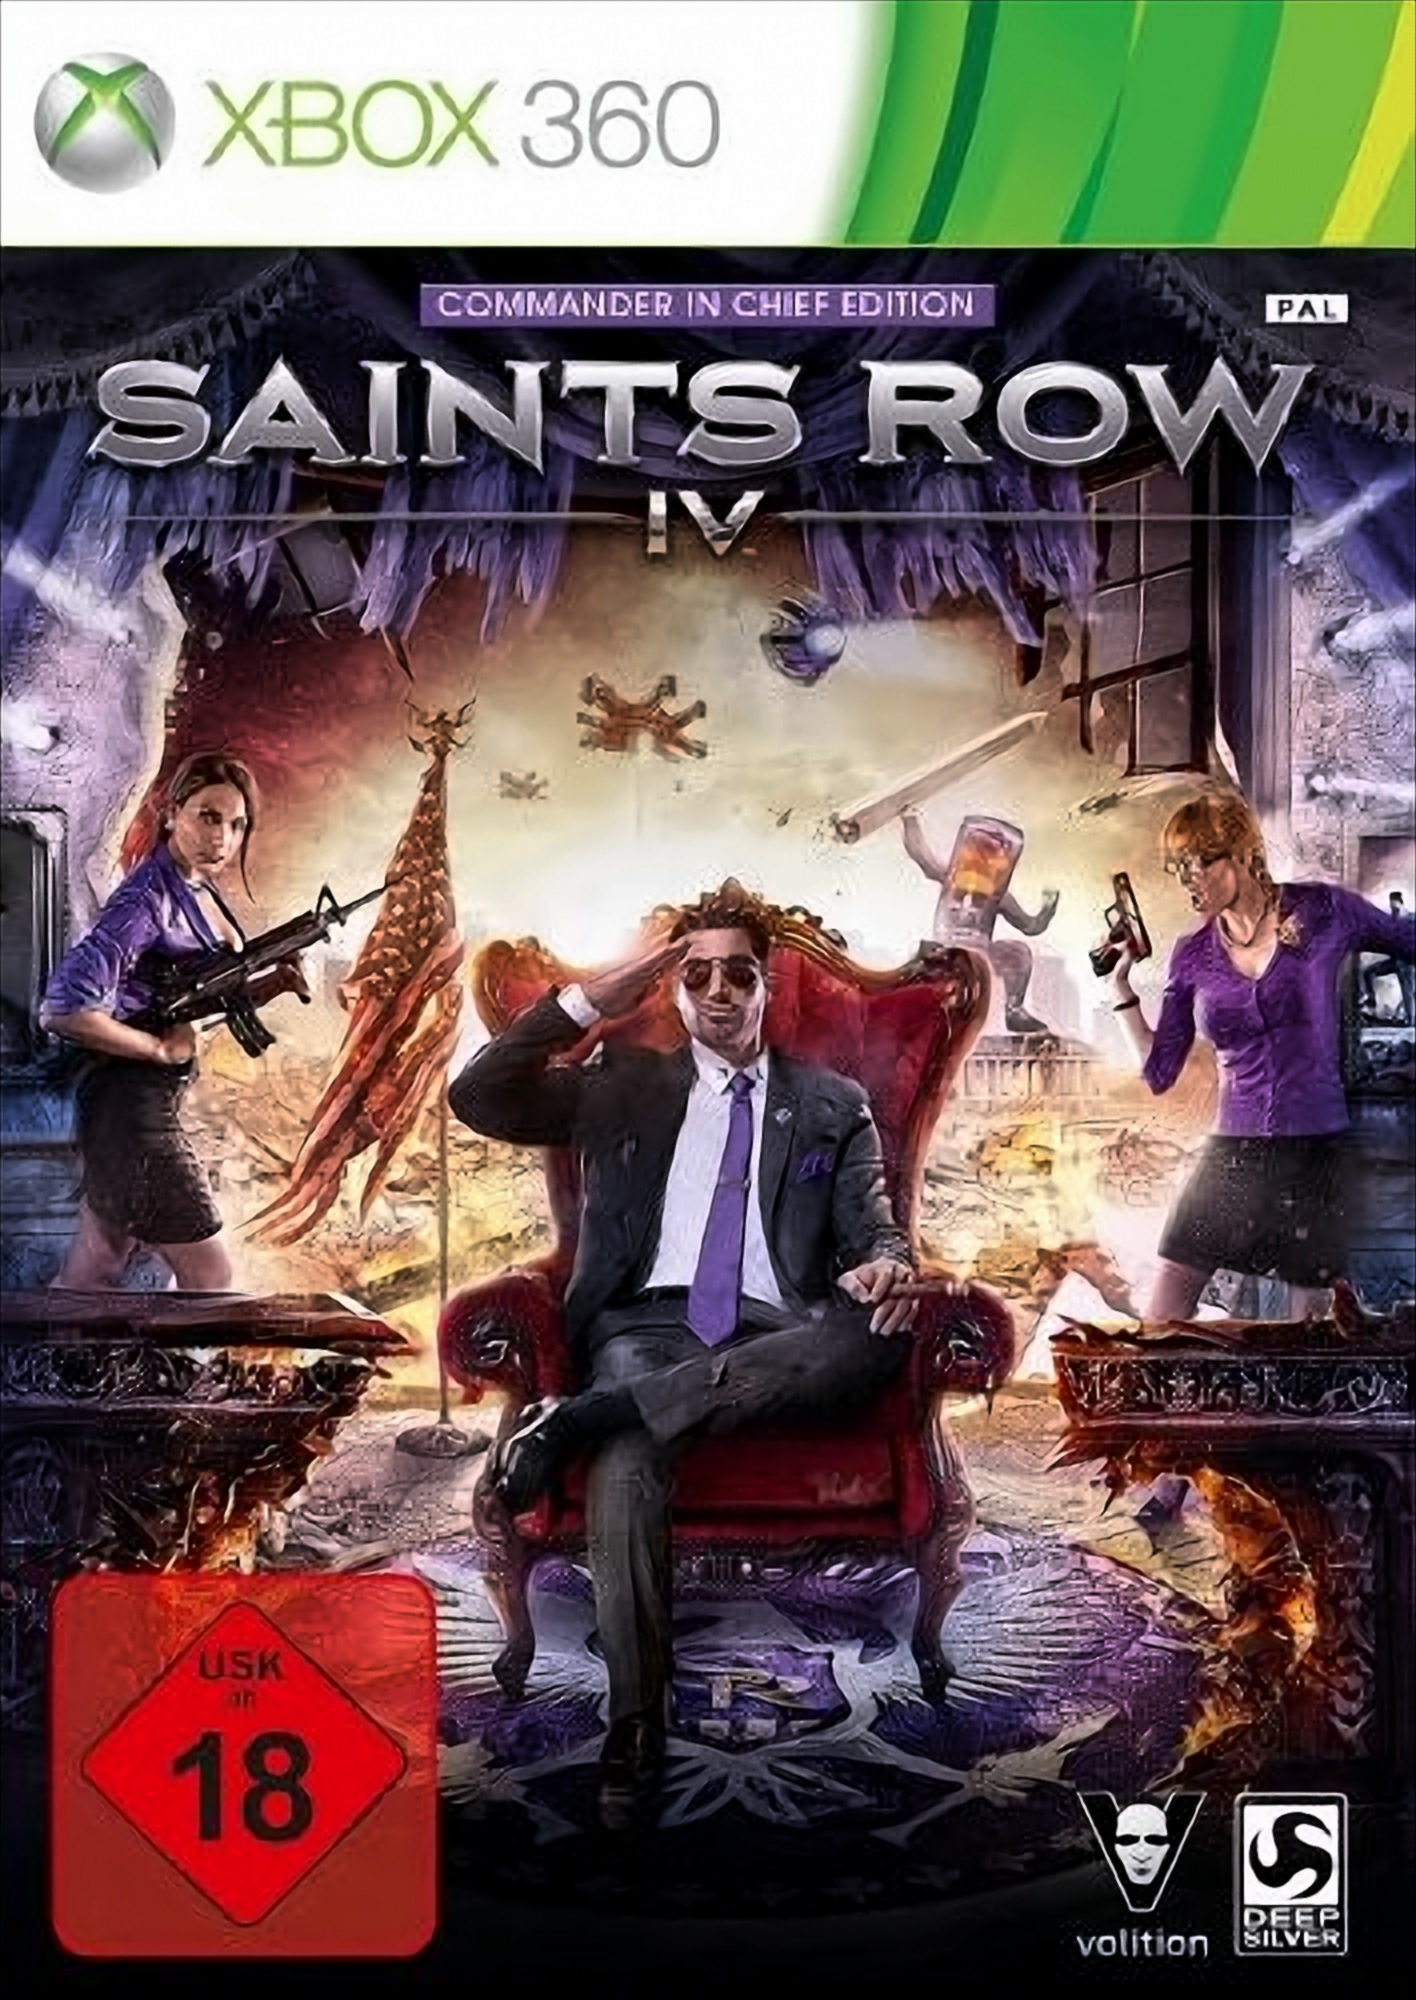 Saints Row IV Commander 360] in Chief Edition - - [Xbox